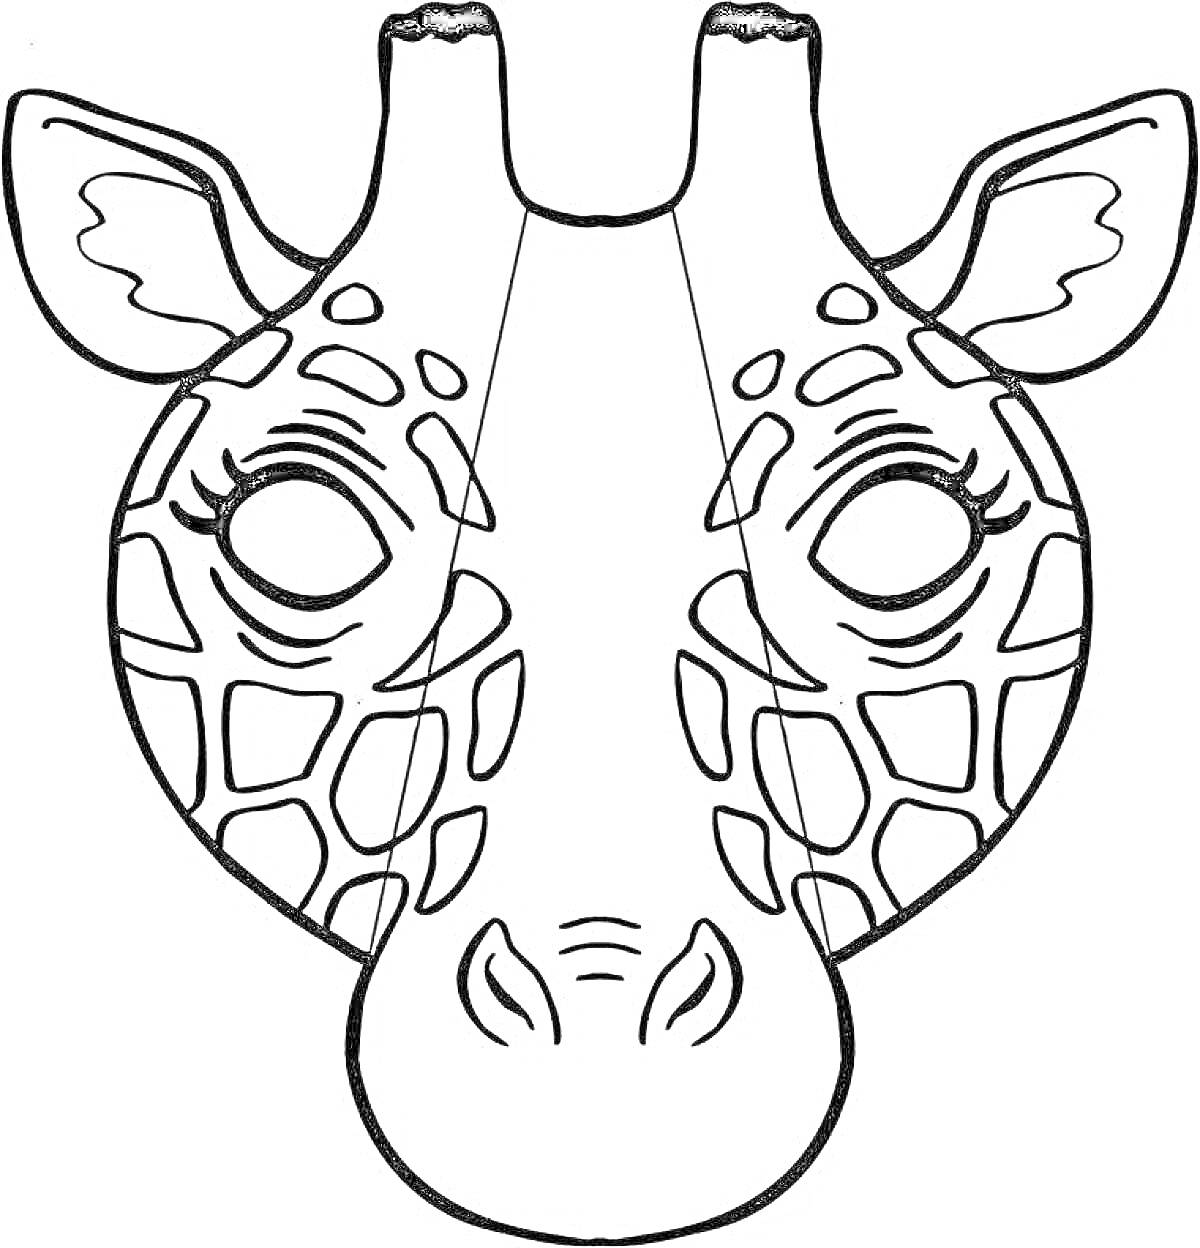 Раскраска маска жирафа с пятнами и полосами